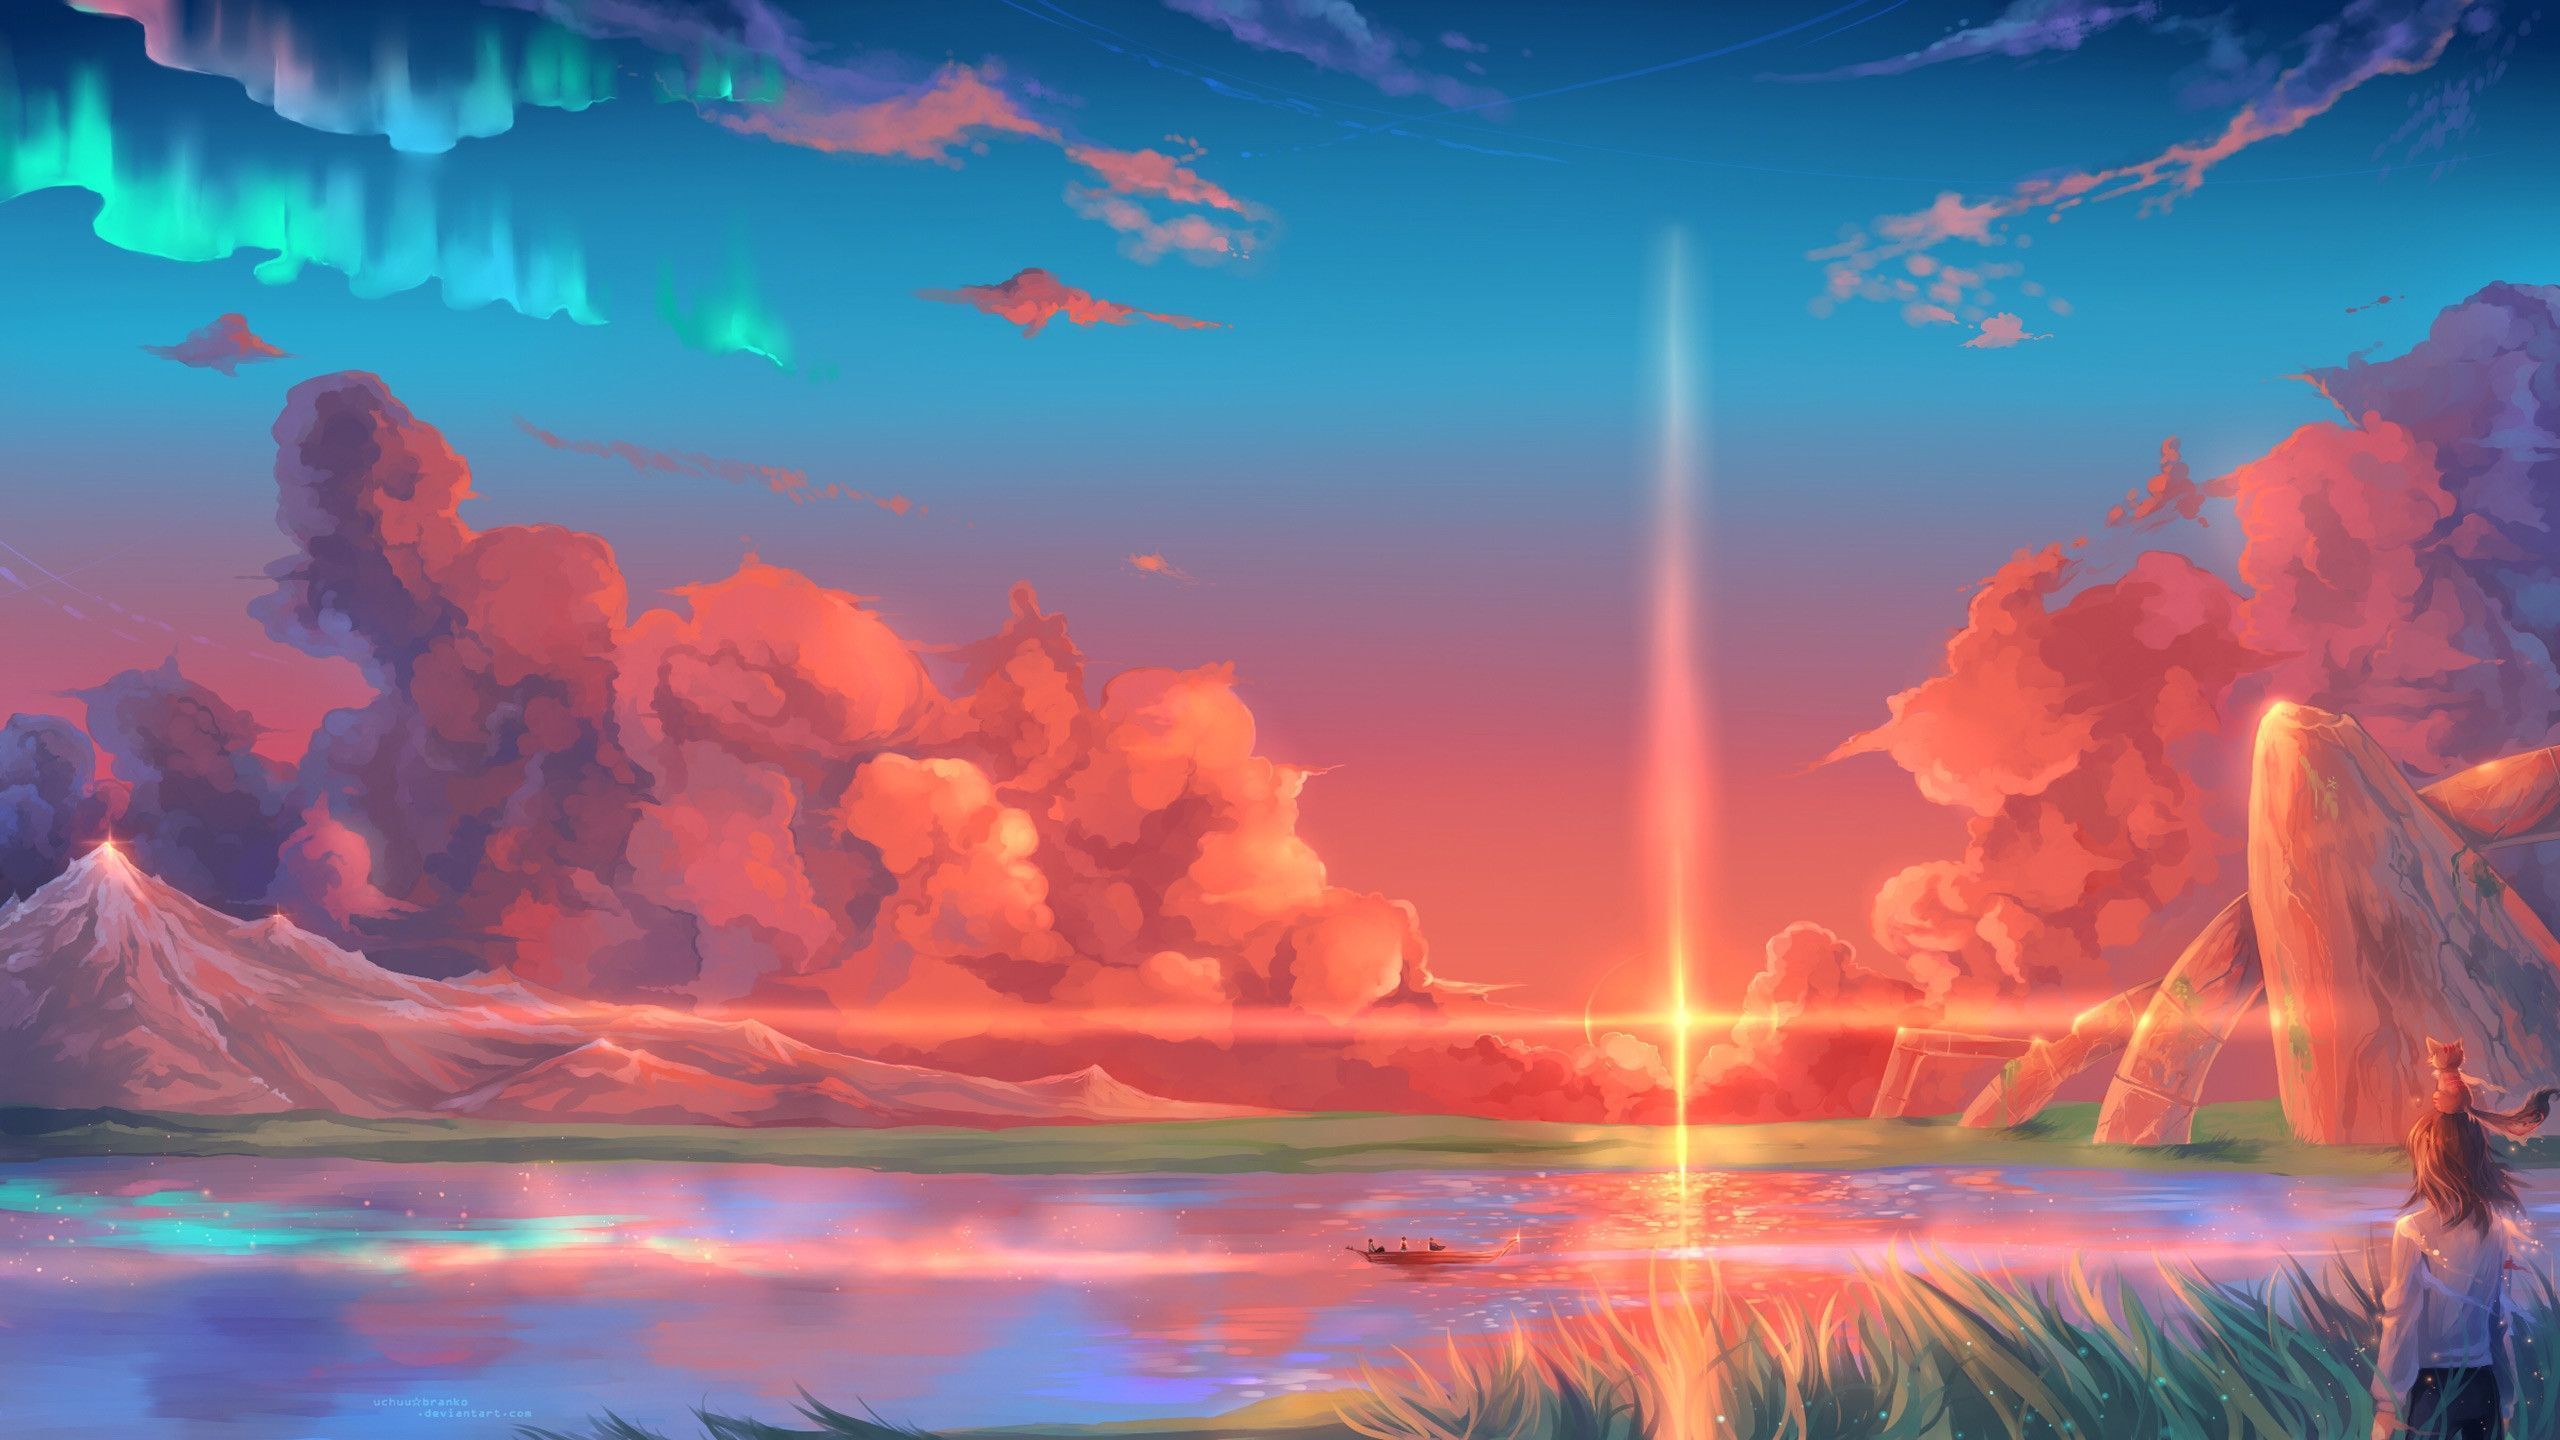 Beautiful Anime Scenery wallpaper in 2560x1440 resolution